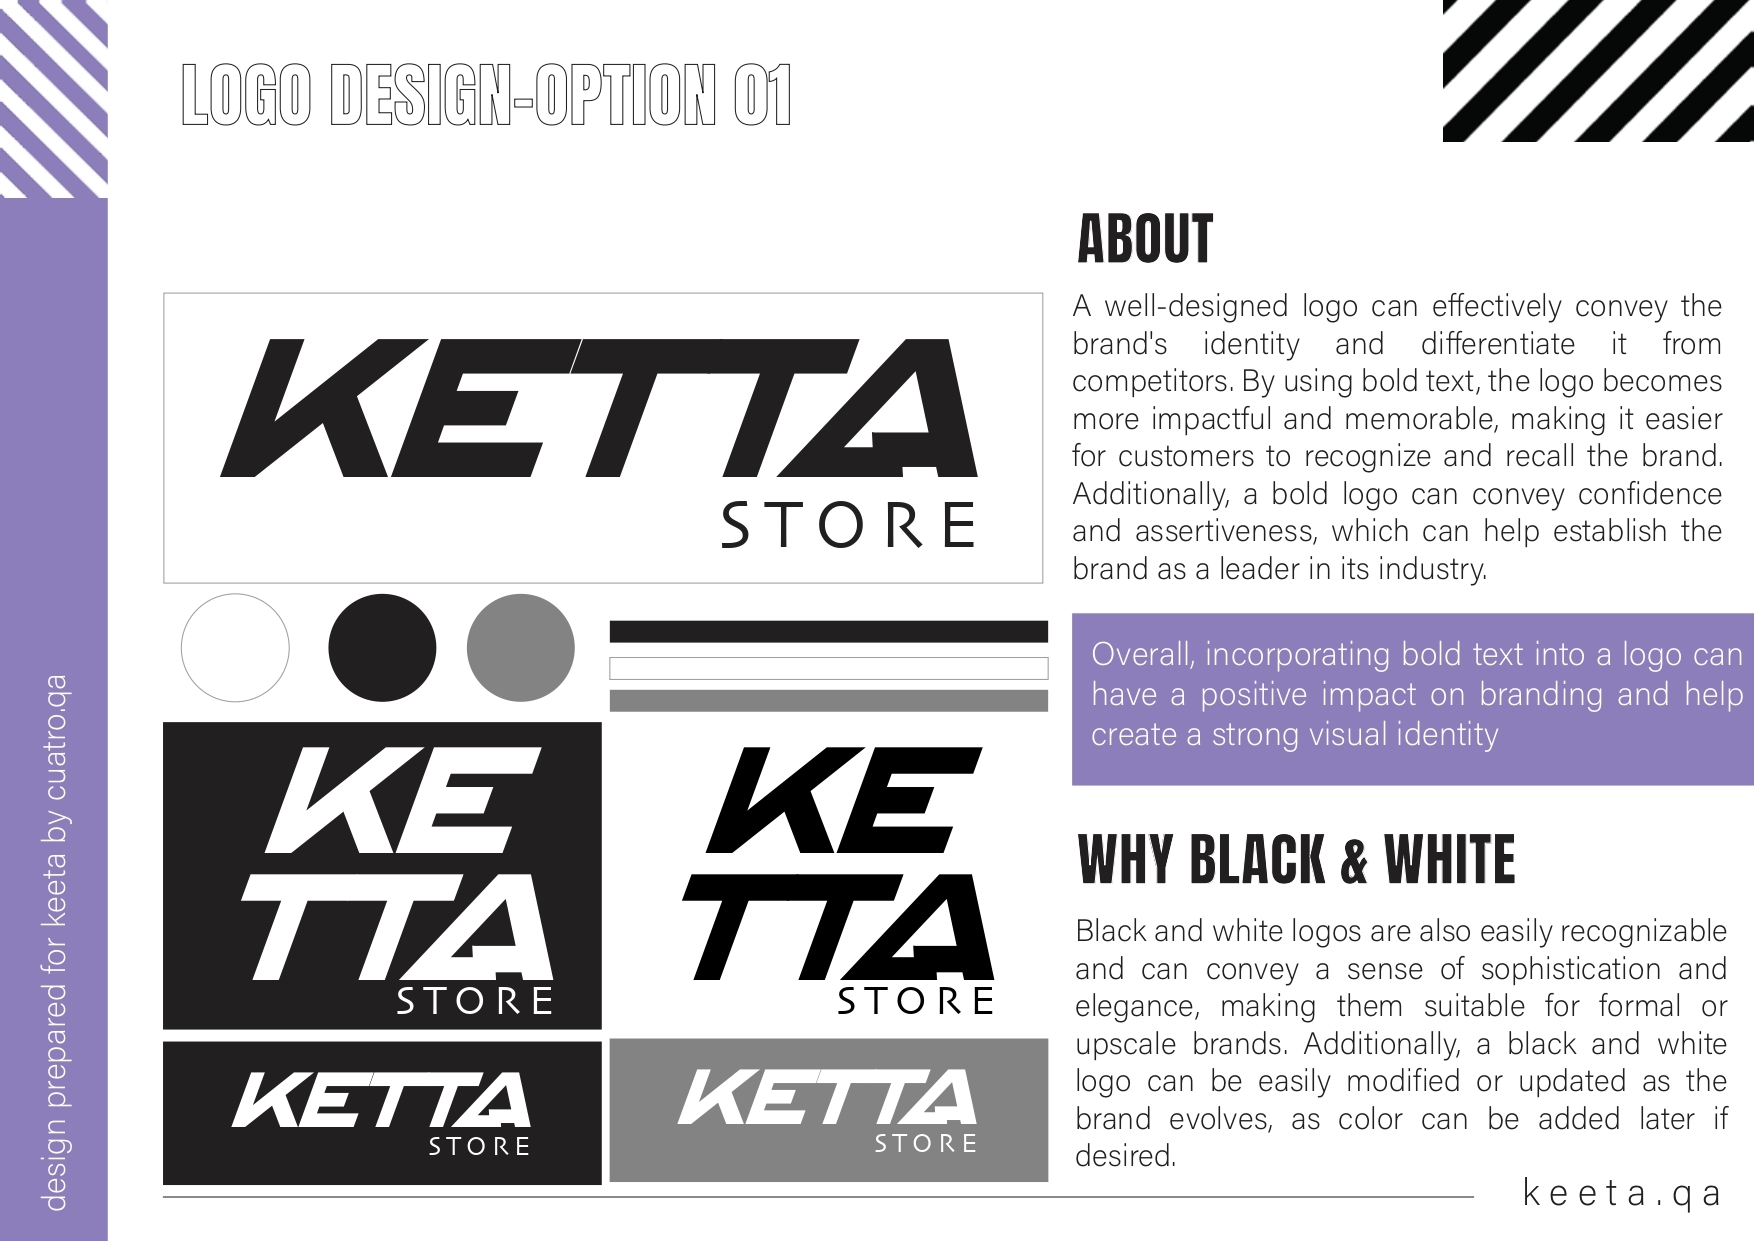 Keeta copy_page-0003